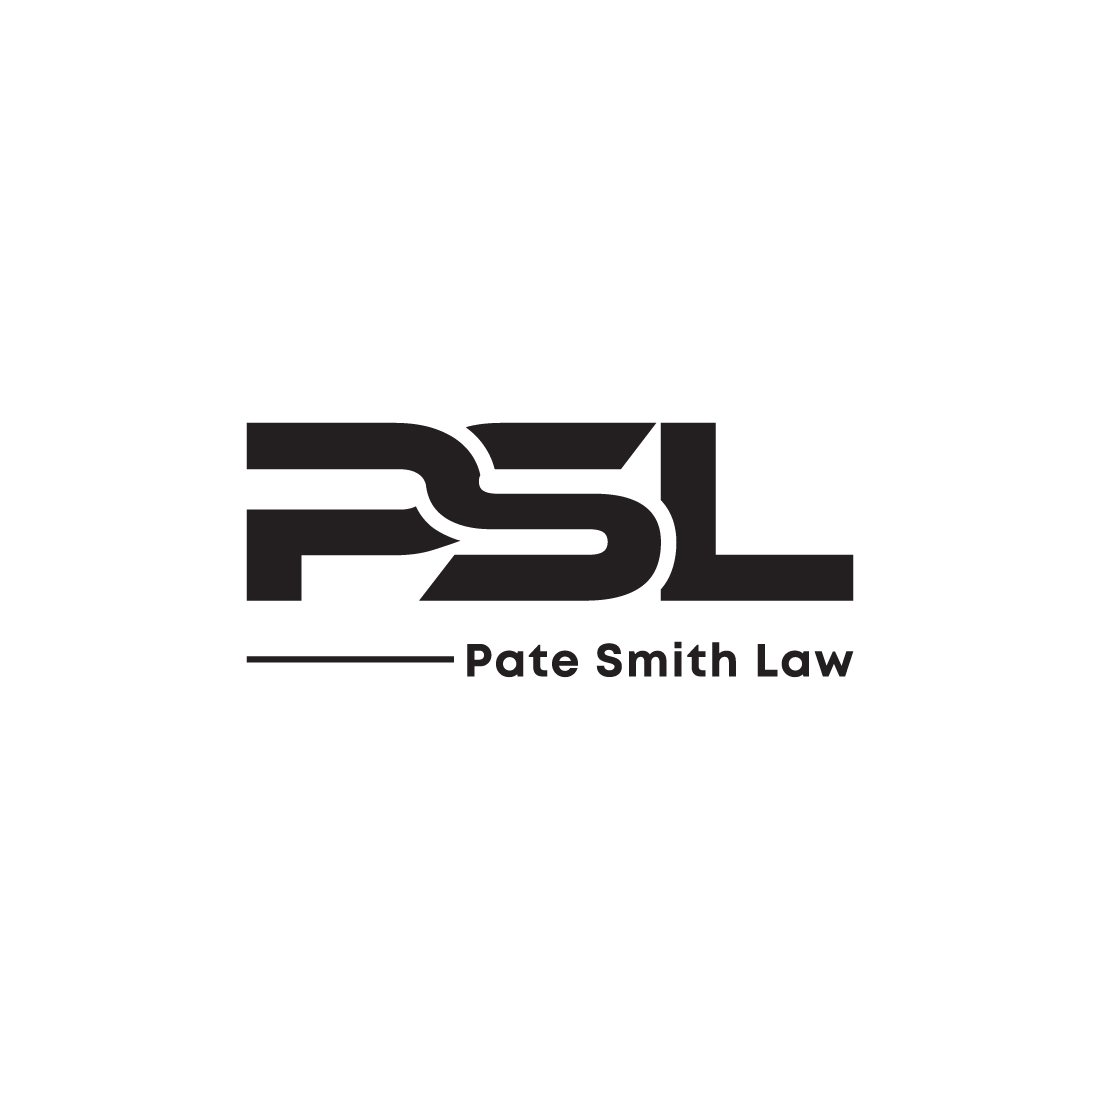 PSL logo preview image.